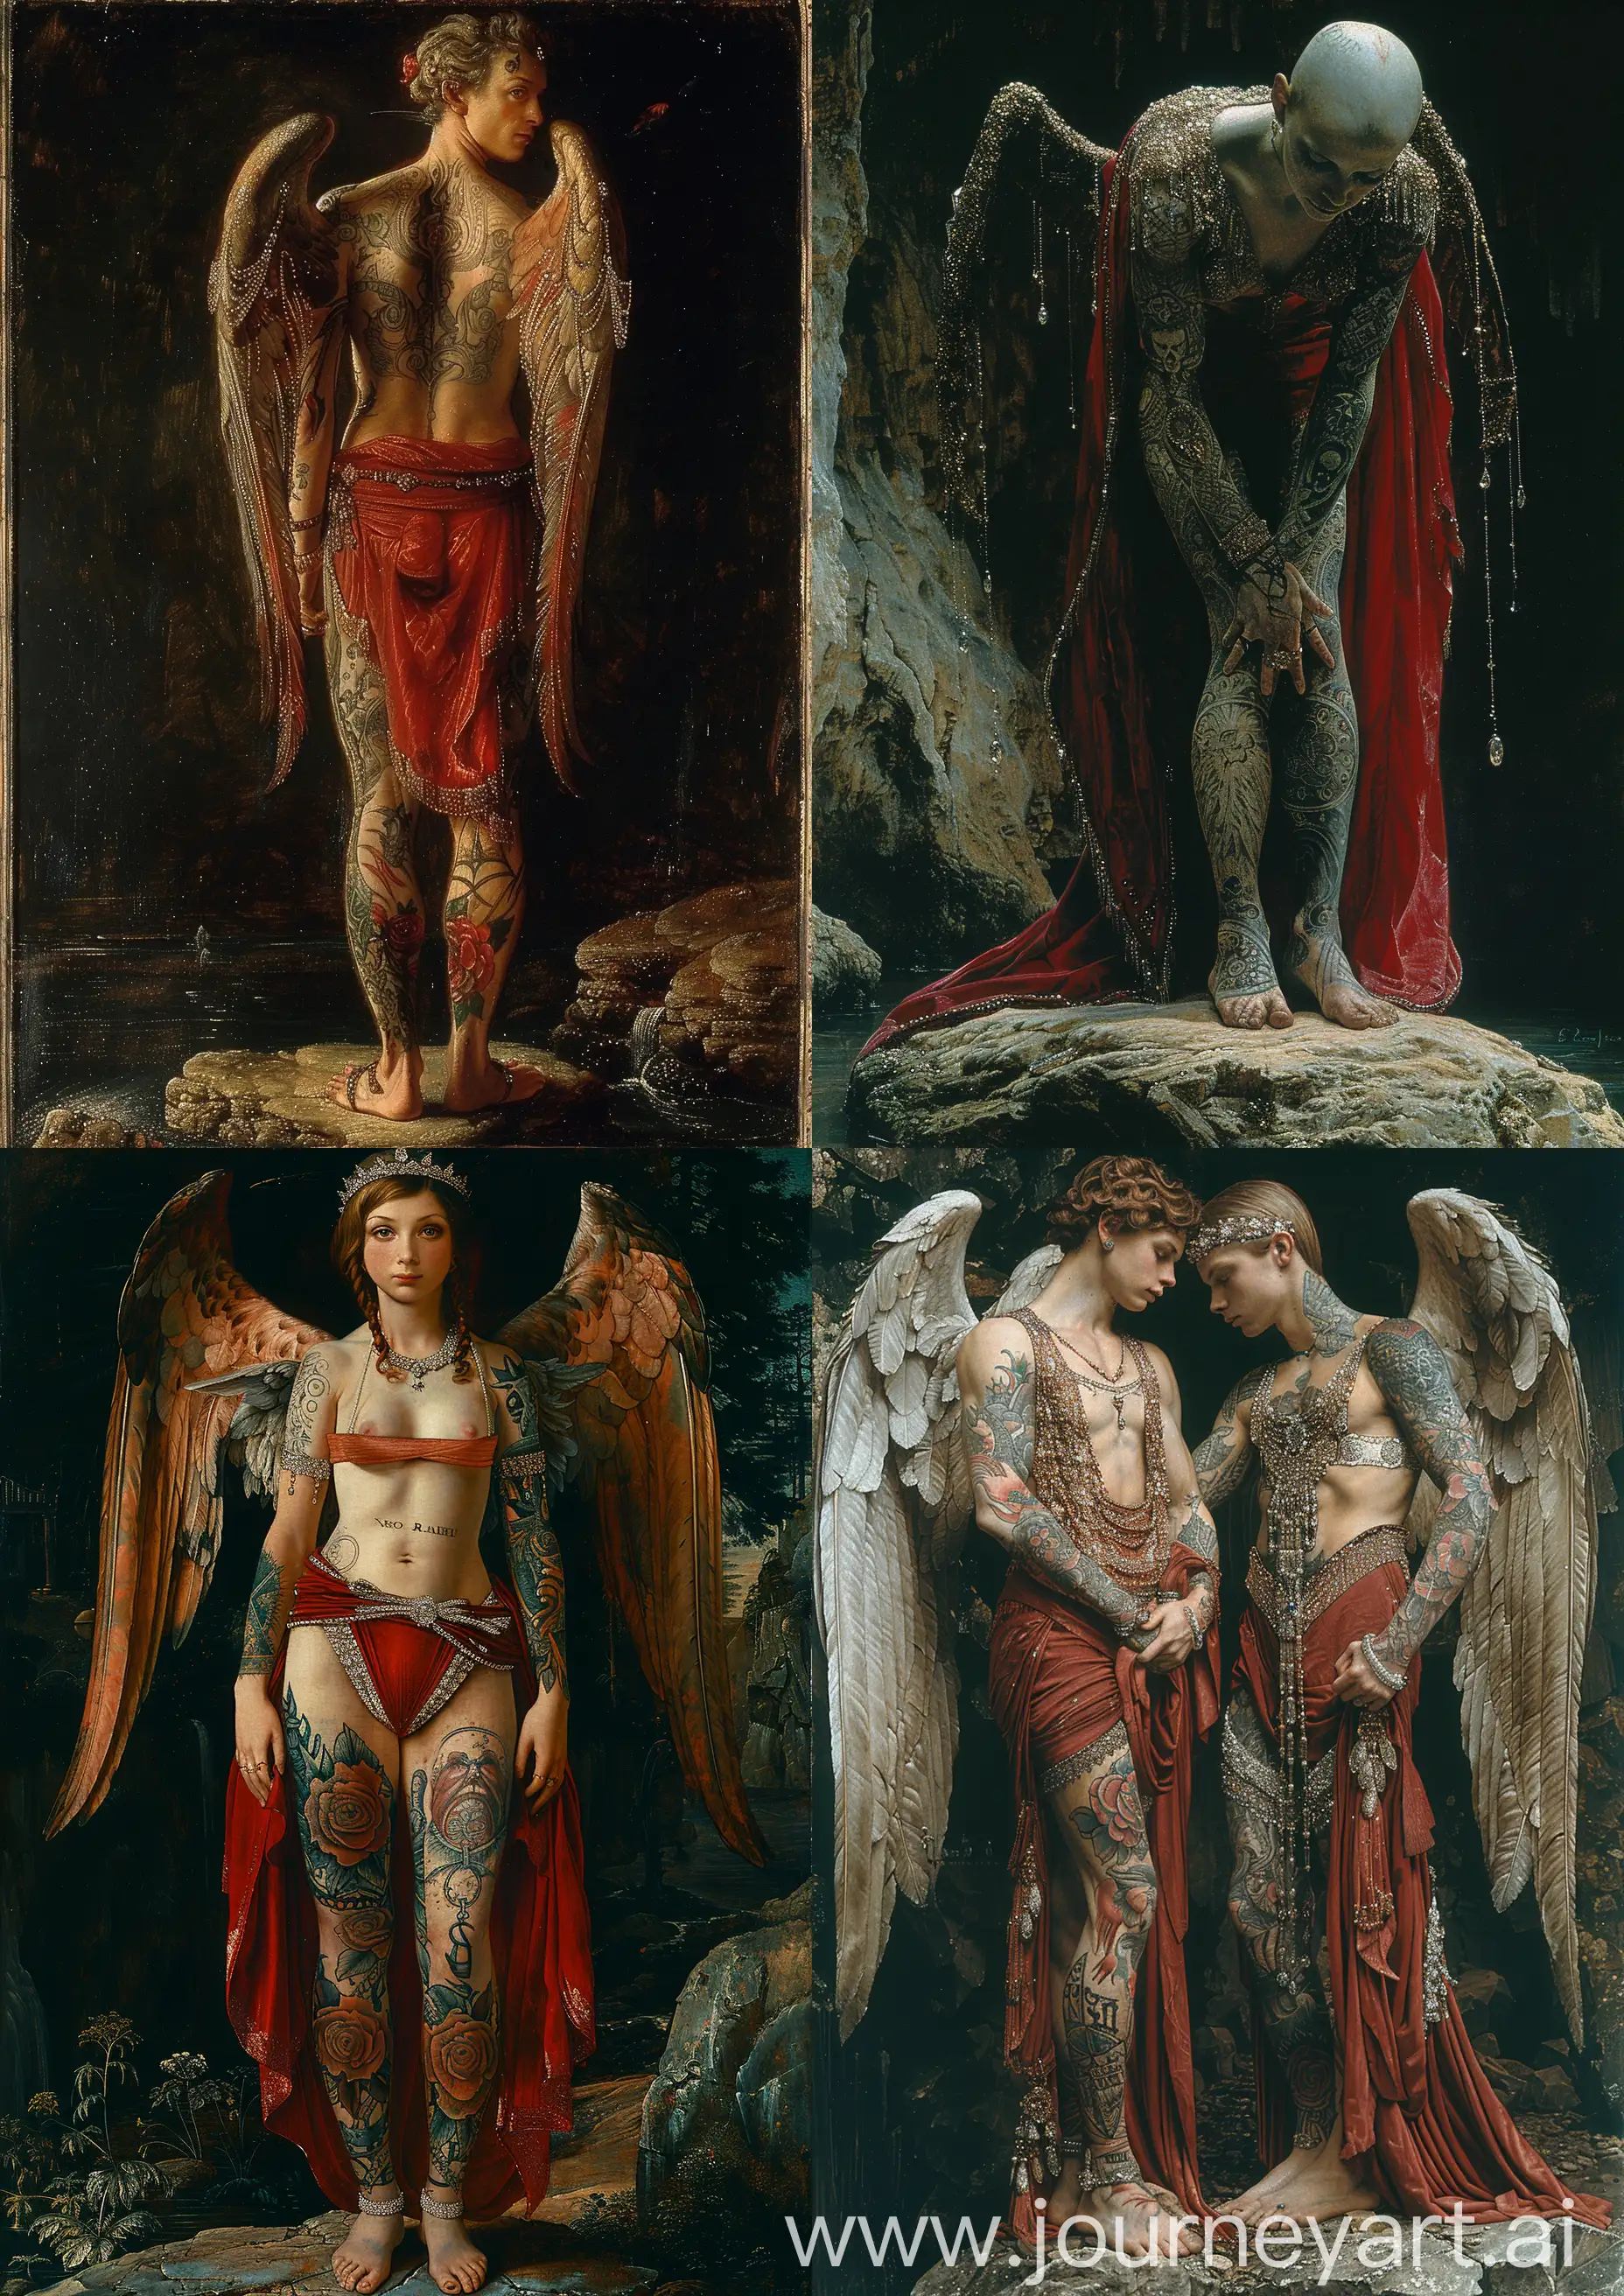 Tattooed-Female-Angel-Warrior-Red-Attire-Diamond-Ornamentation